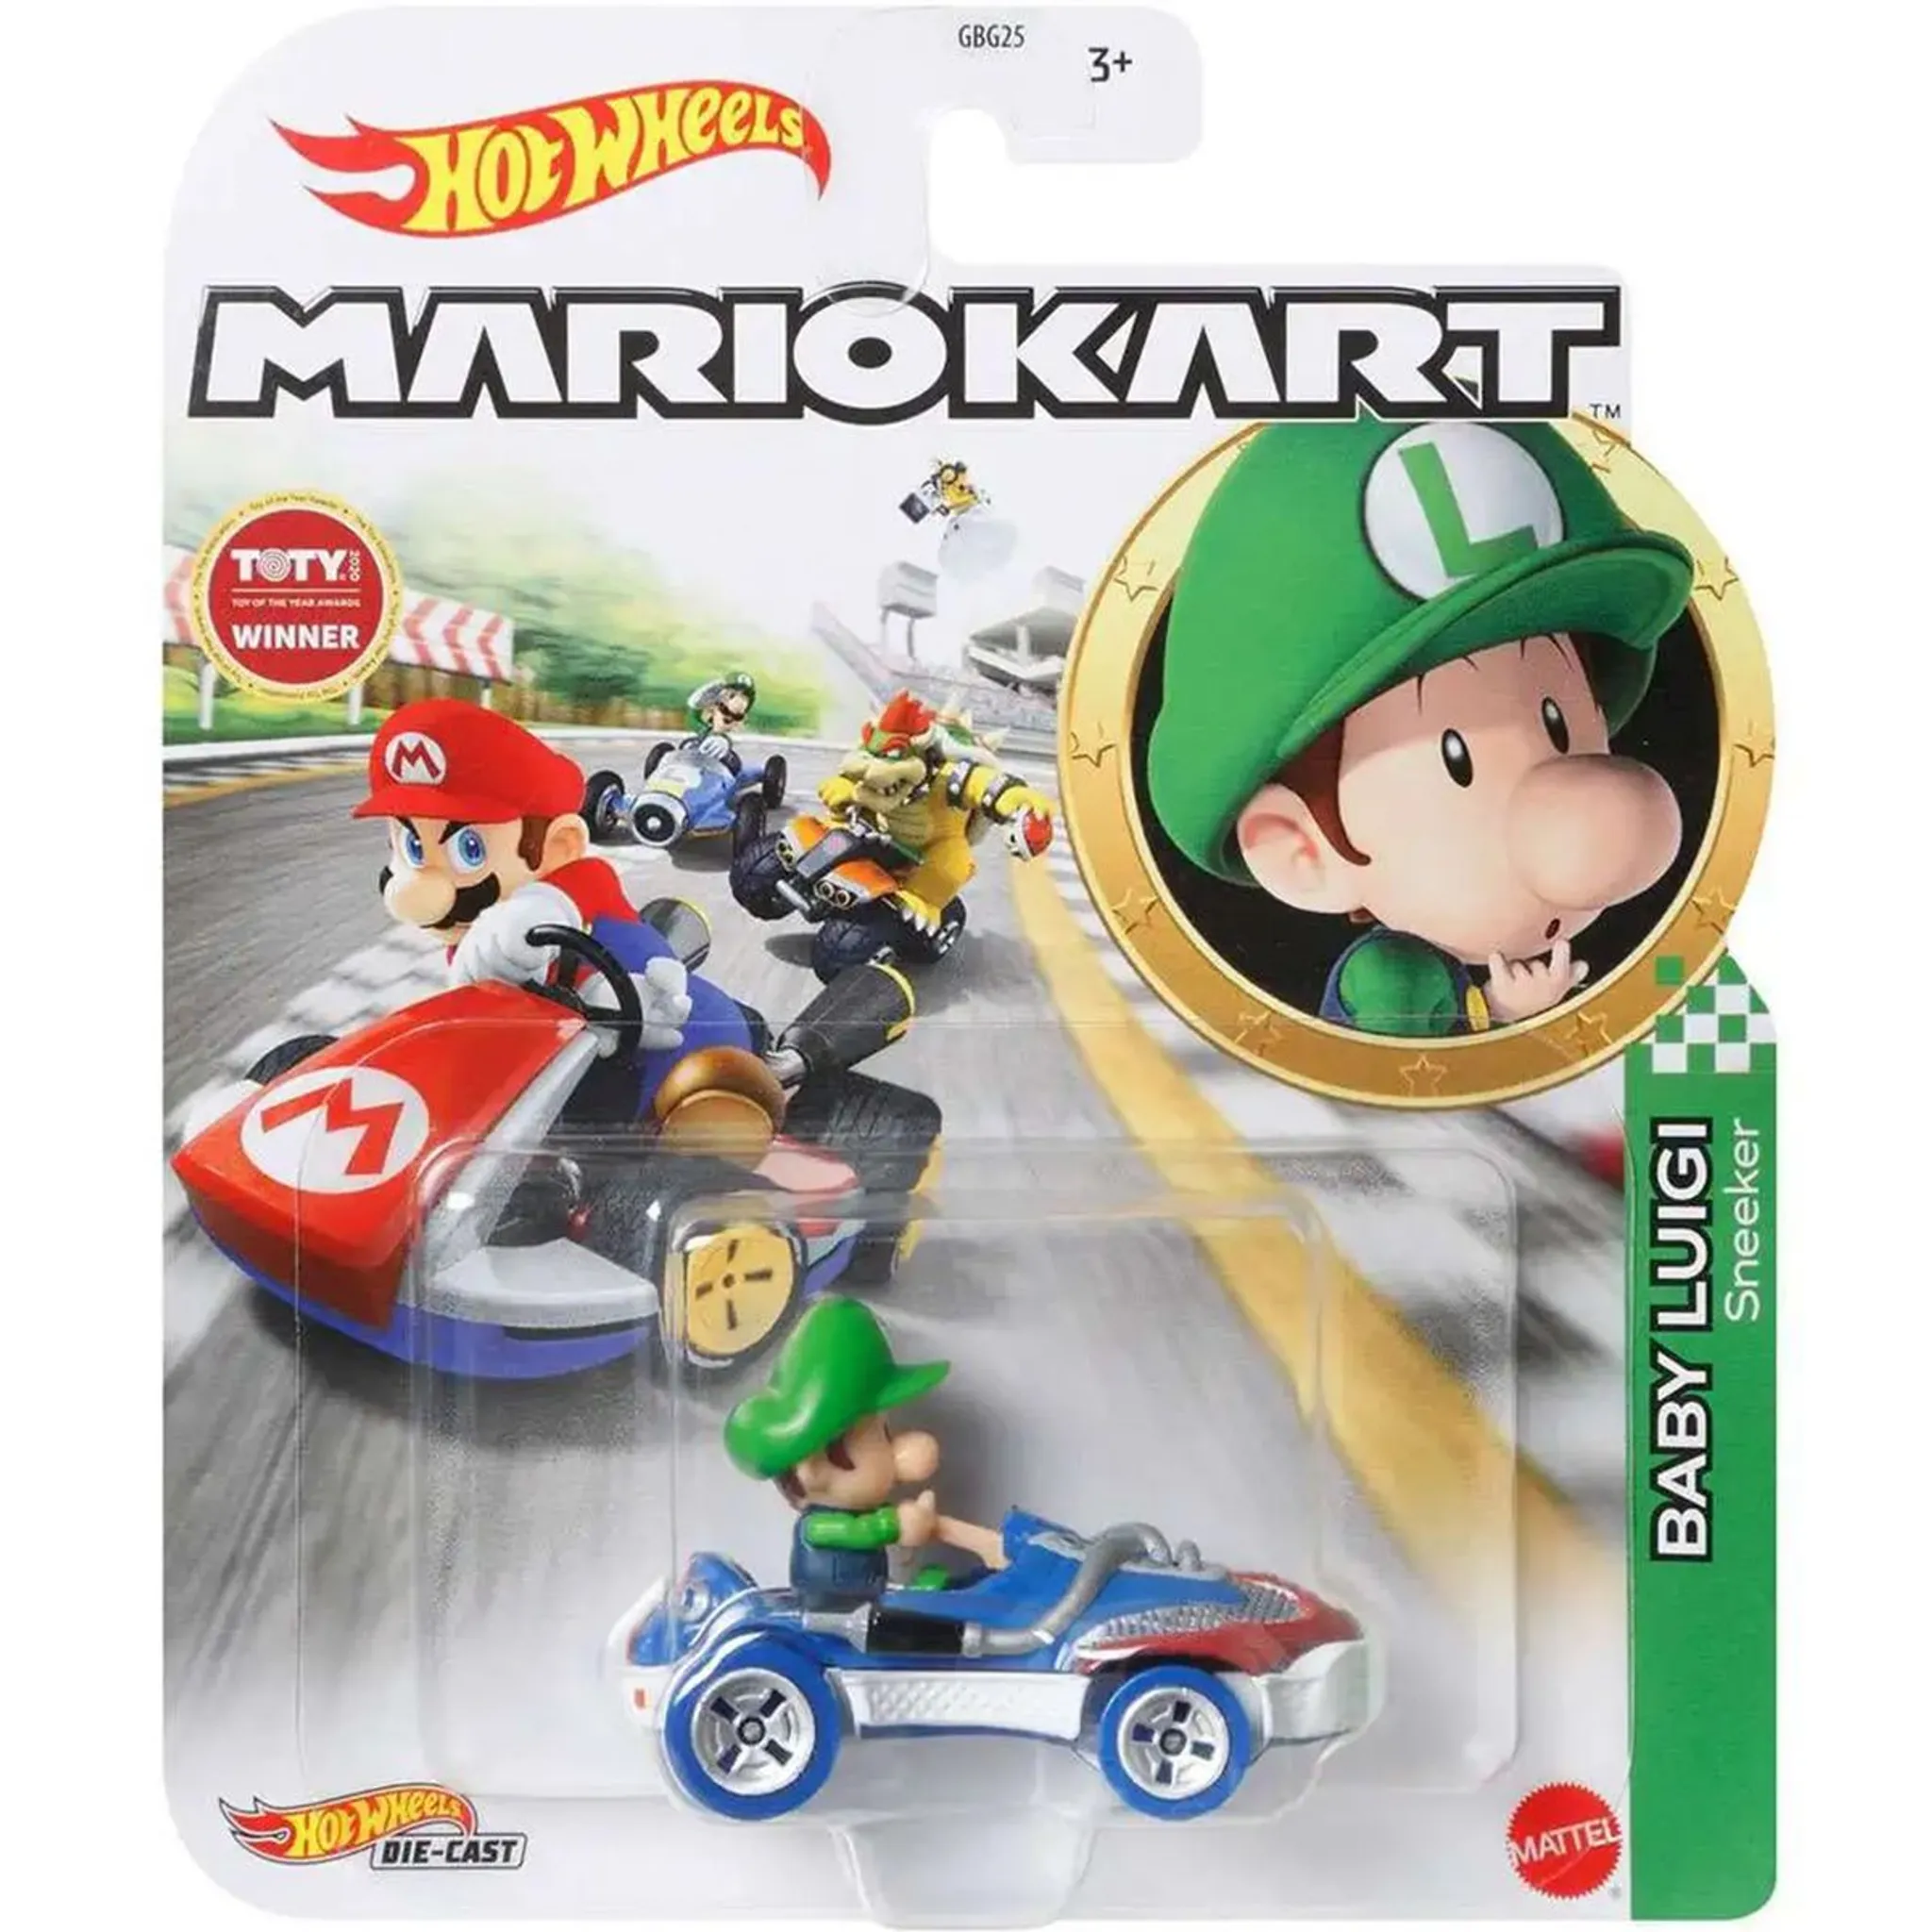 Mattel GBG25; HDB28 - Kart Wheels Mario Hot